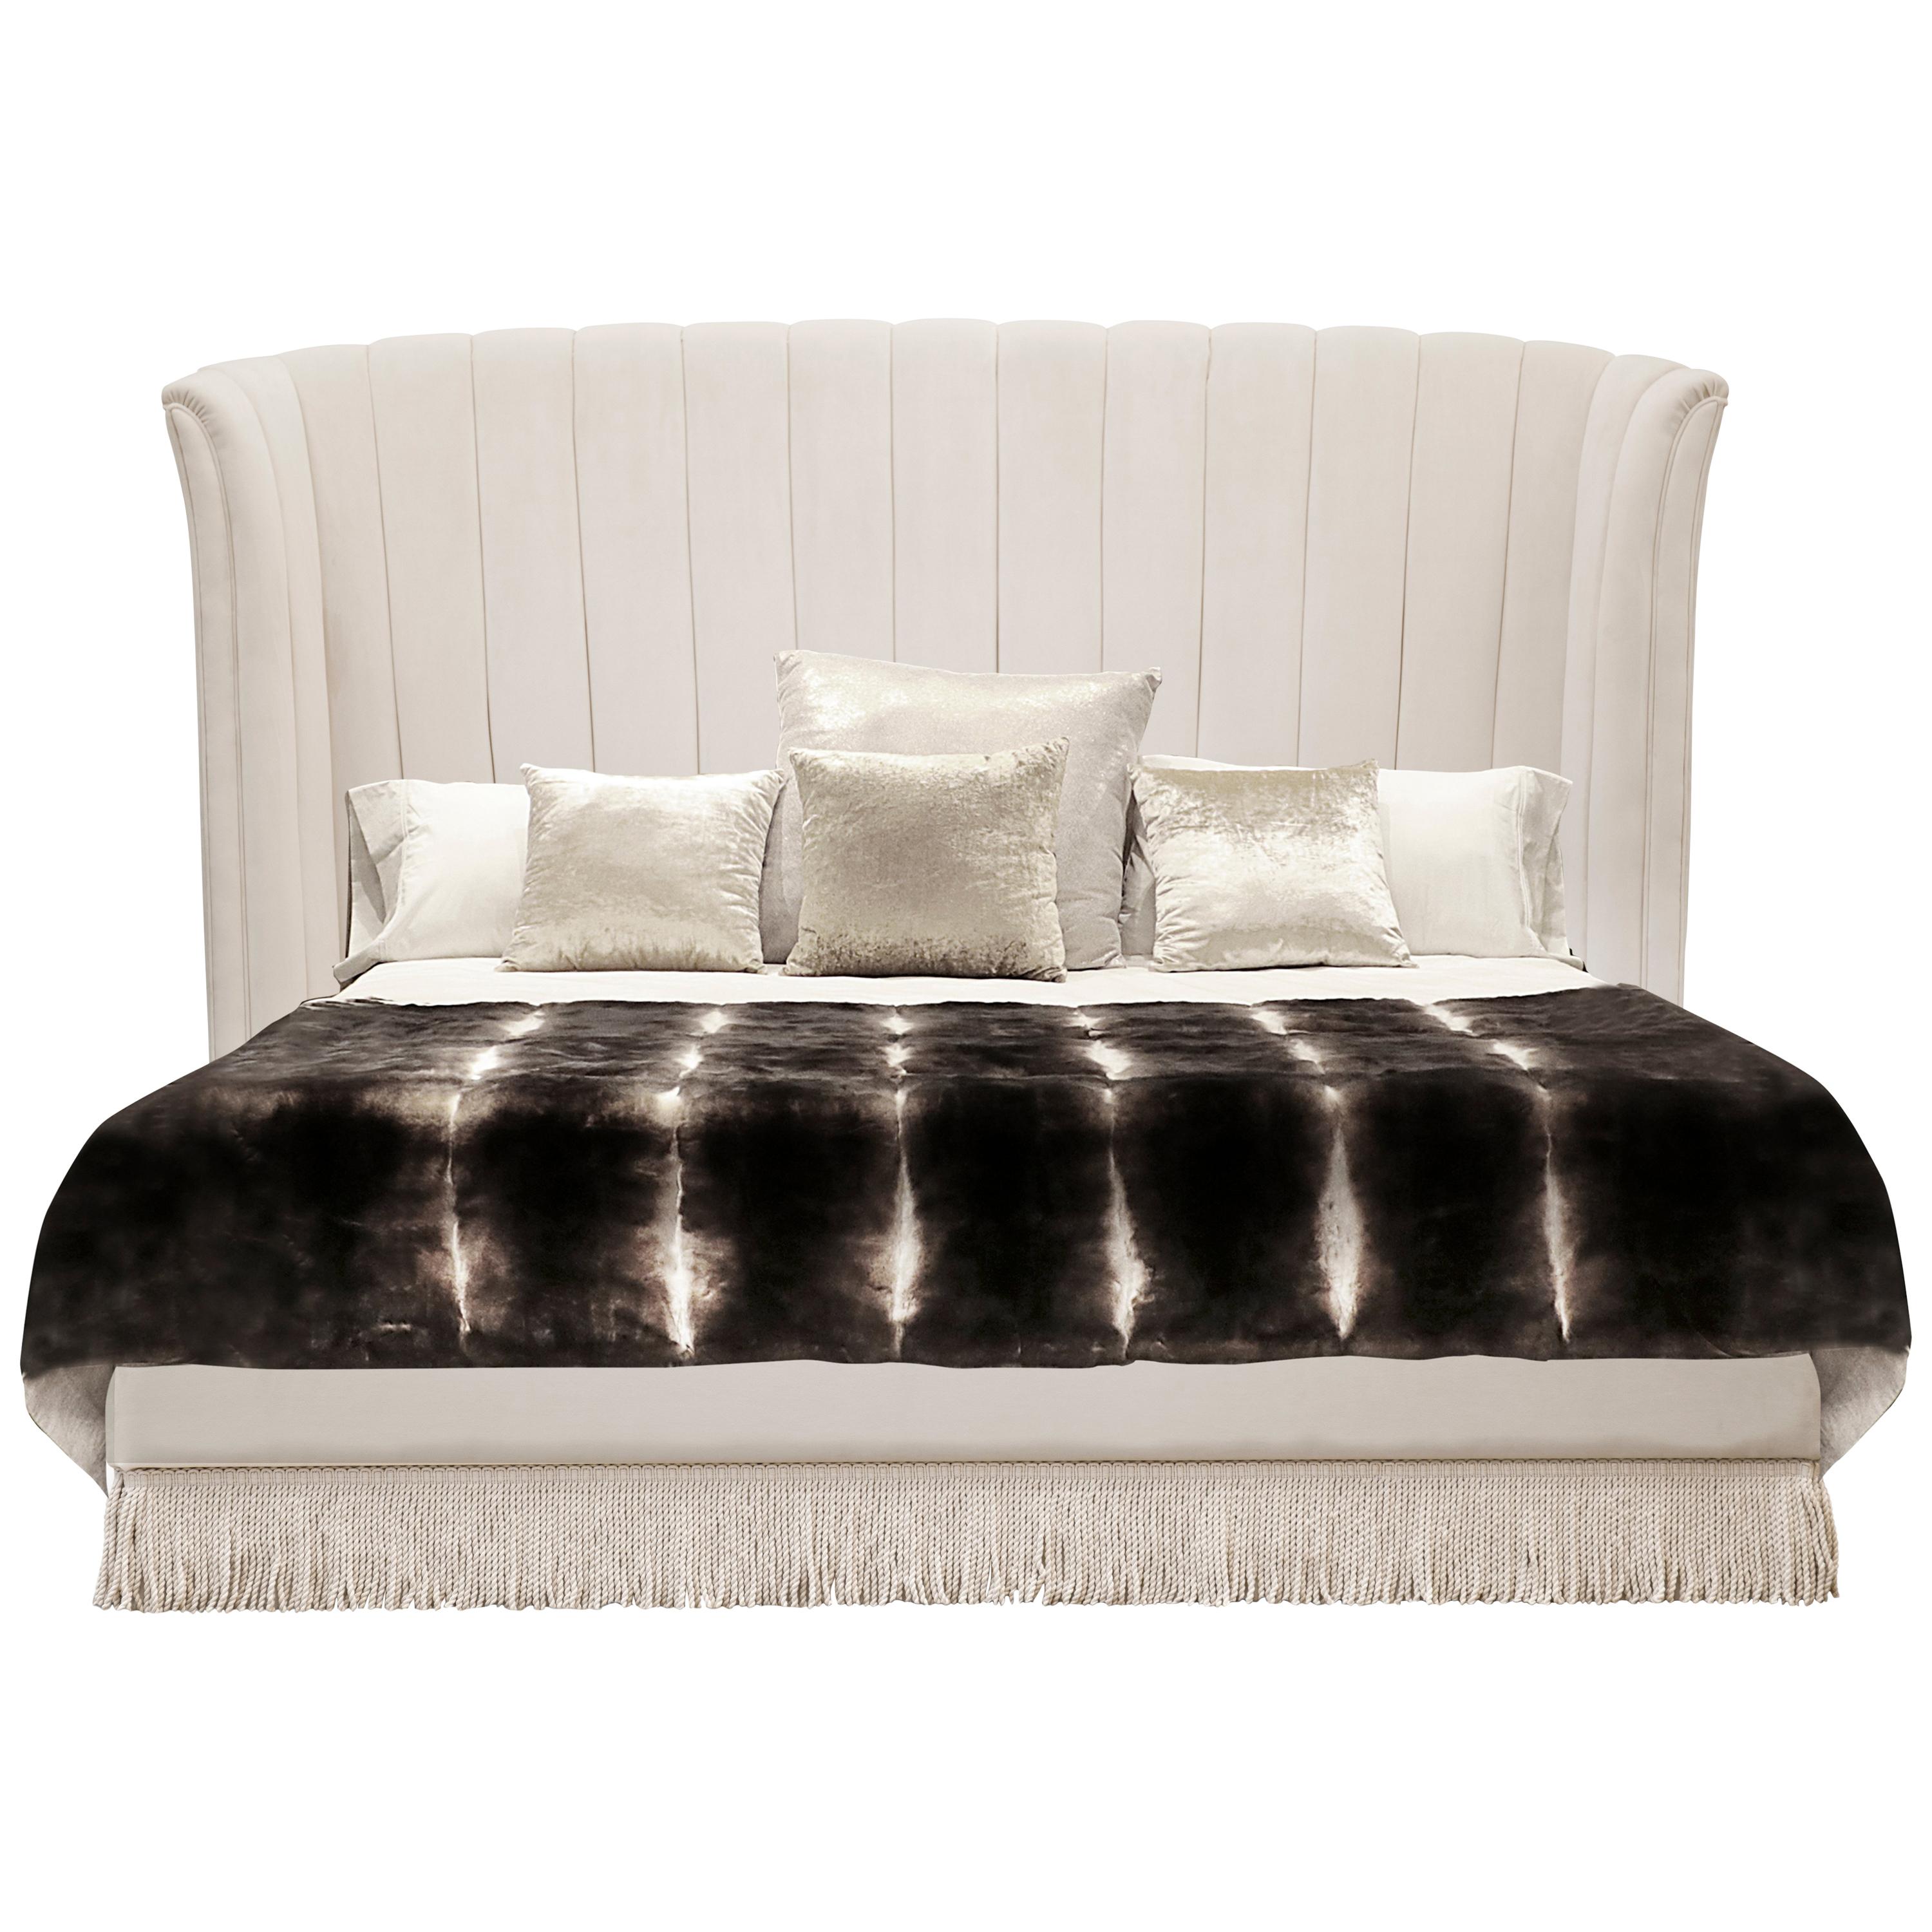 Sevilliana Bed For Sale